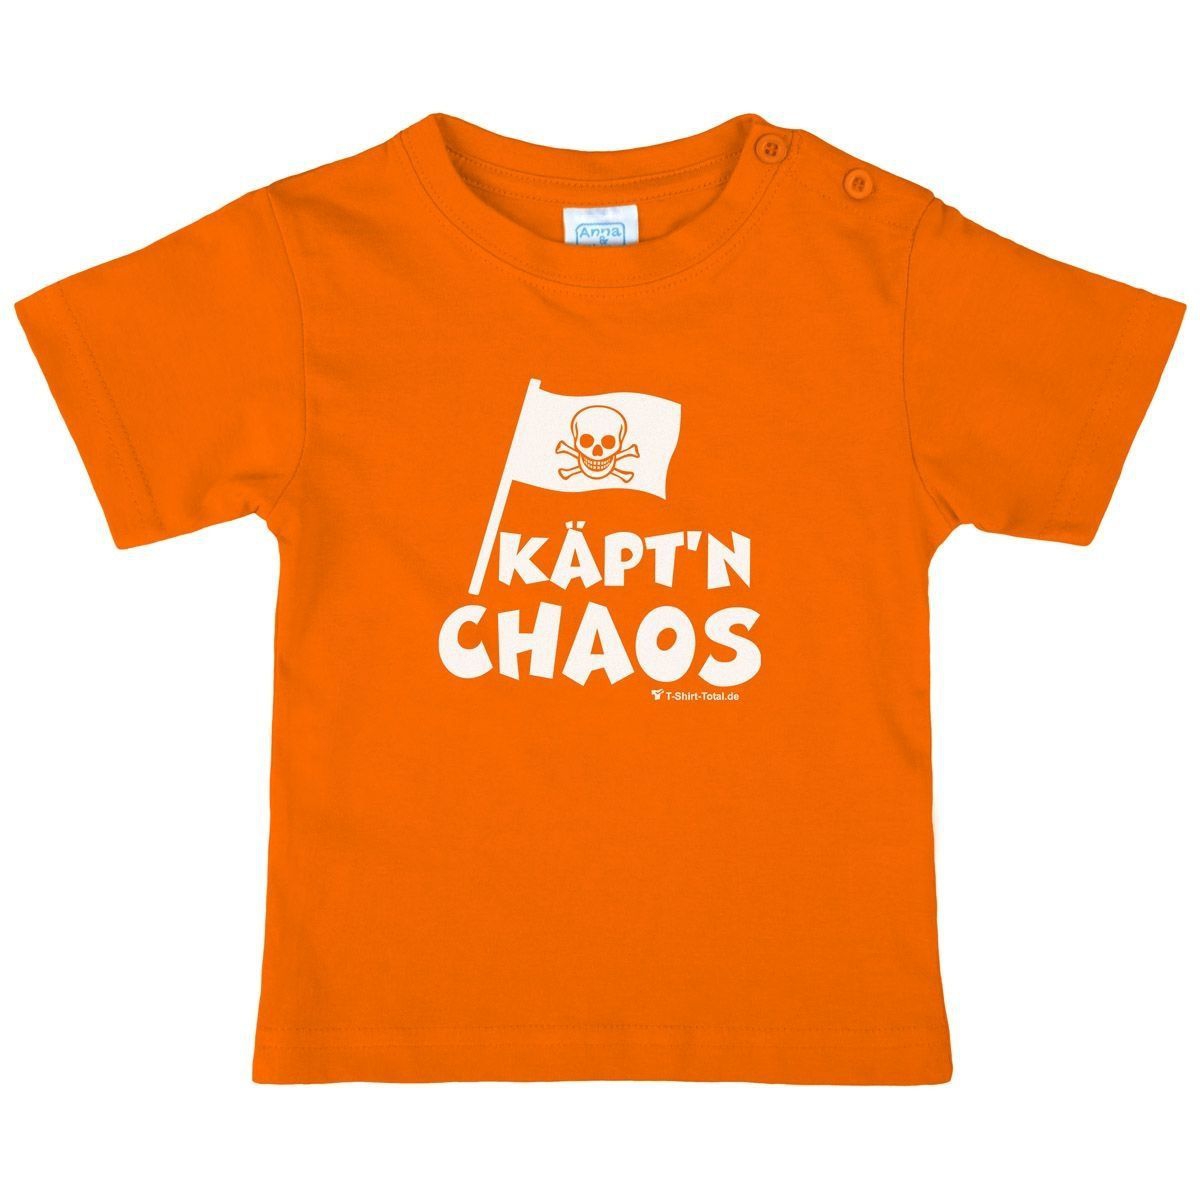 Käptn Chaos Kinder T-Shirt orange 104